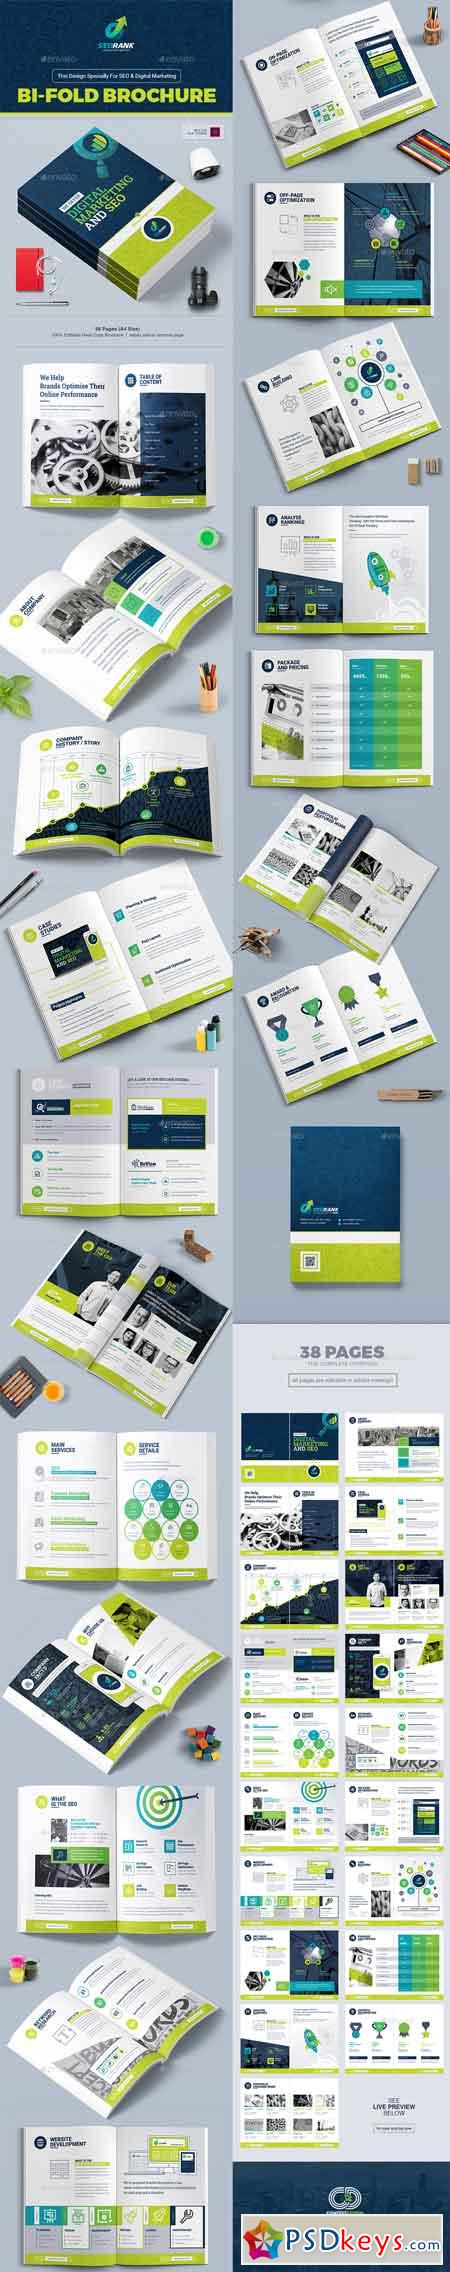 Bi-Fold Brochure Template for SEO (Search Engine Optimization) & Digital Marketing Agency Company